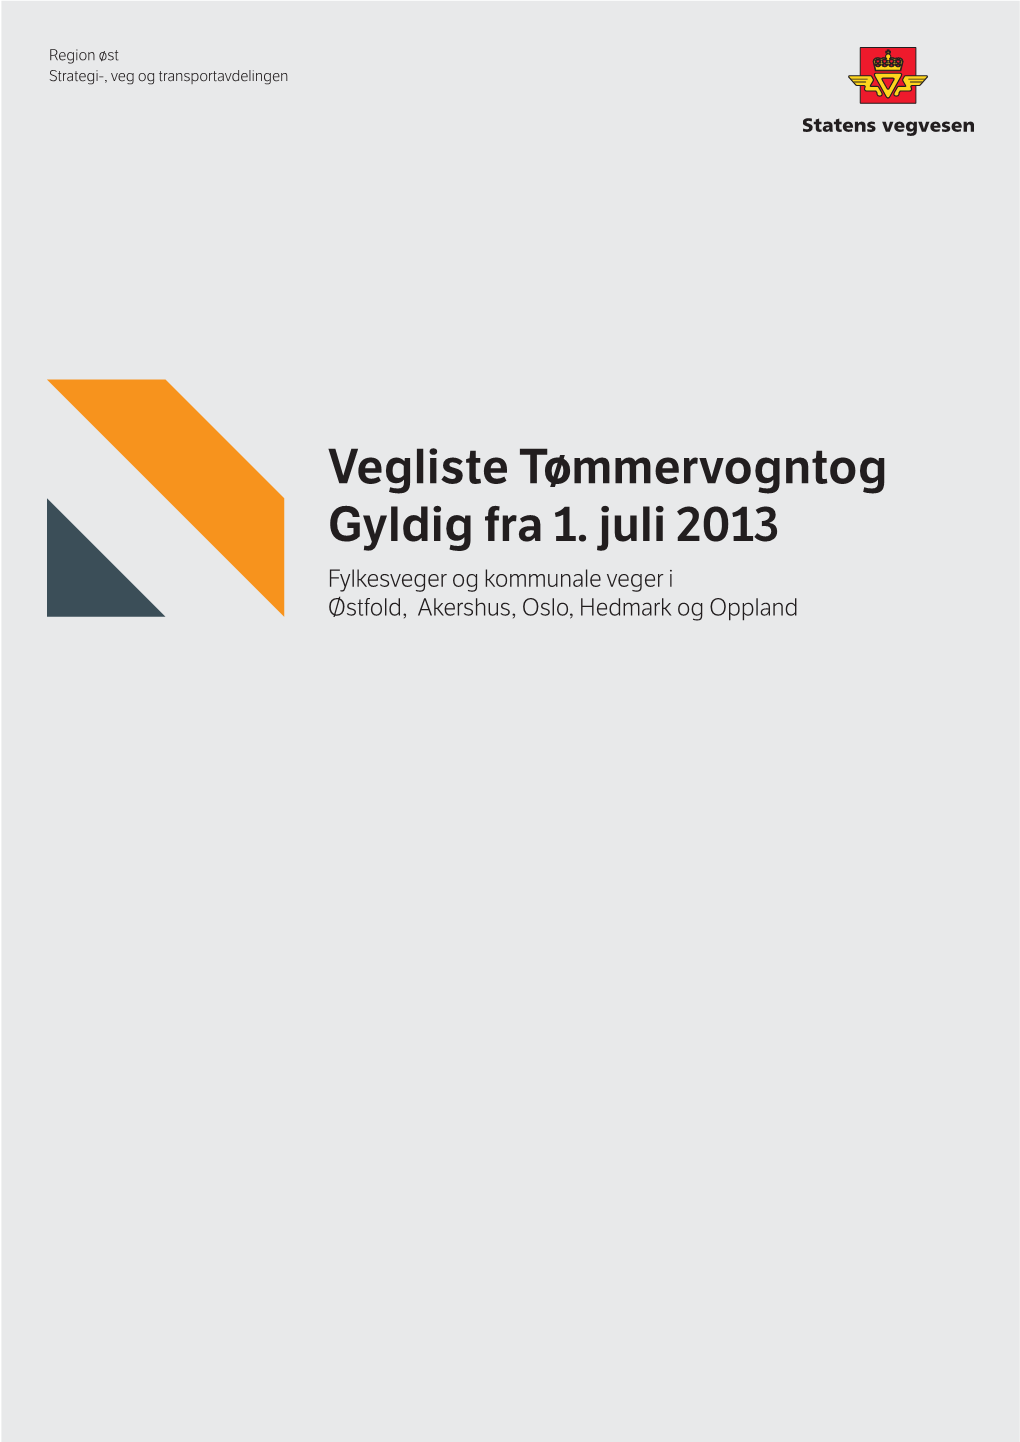 Vegliste Tømmervogntog Gyldig Fra 1. Juli 2013 Fylkesveger Og Kommunale Veger I Østfold, Akershus, Oslo, Hedmark Og Oppland